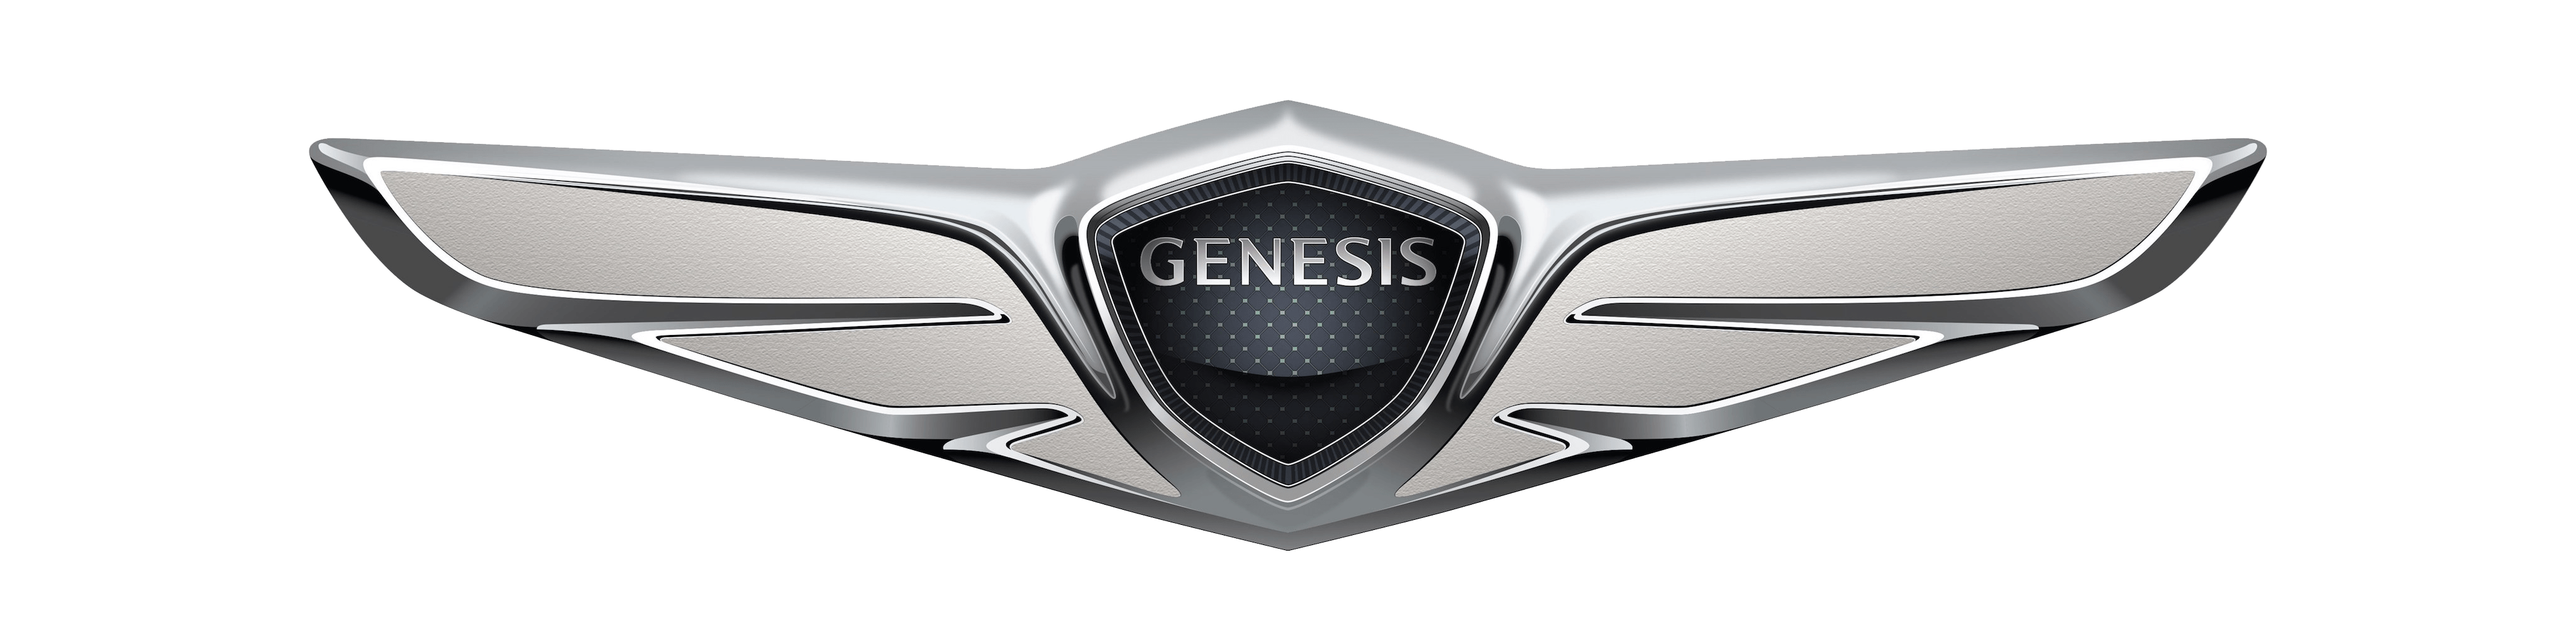 Hyundai Genesis Logo - Genesis Logo Meaning and History, latest models | World Cars Brands